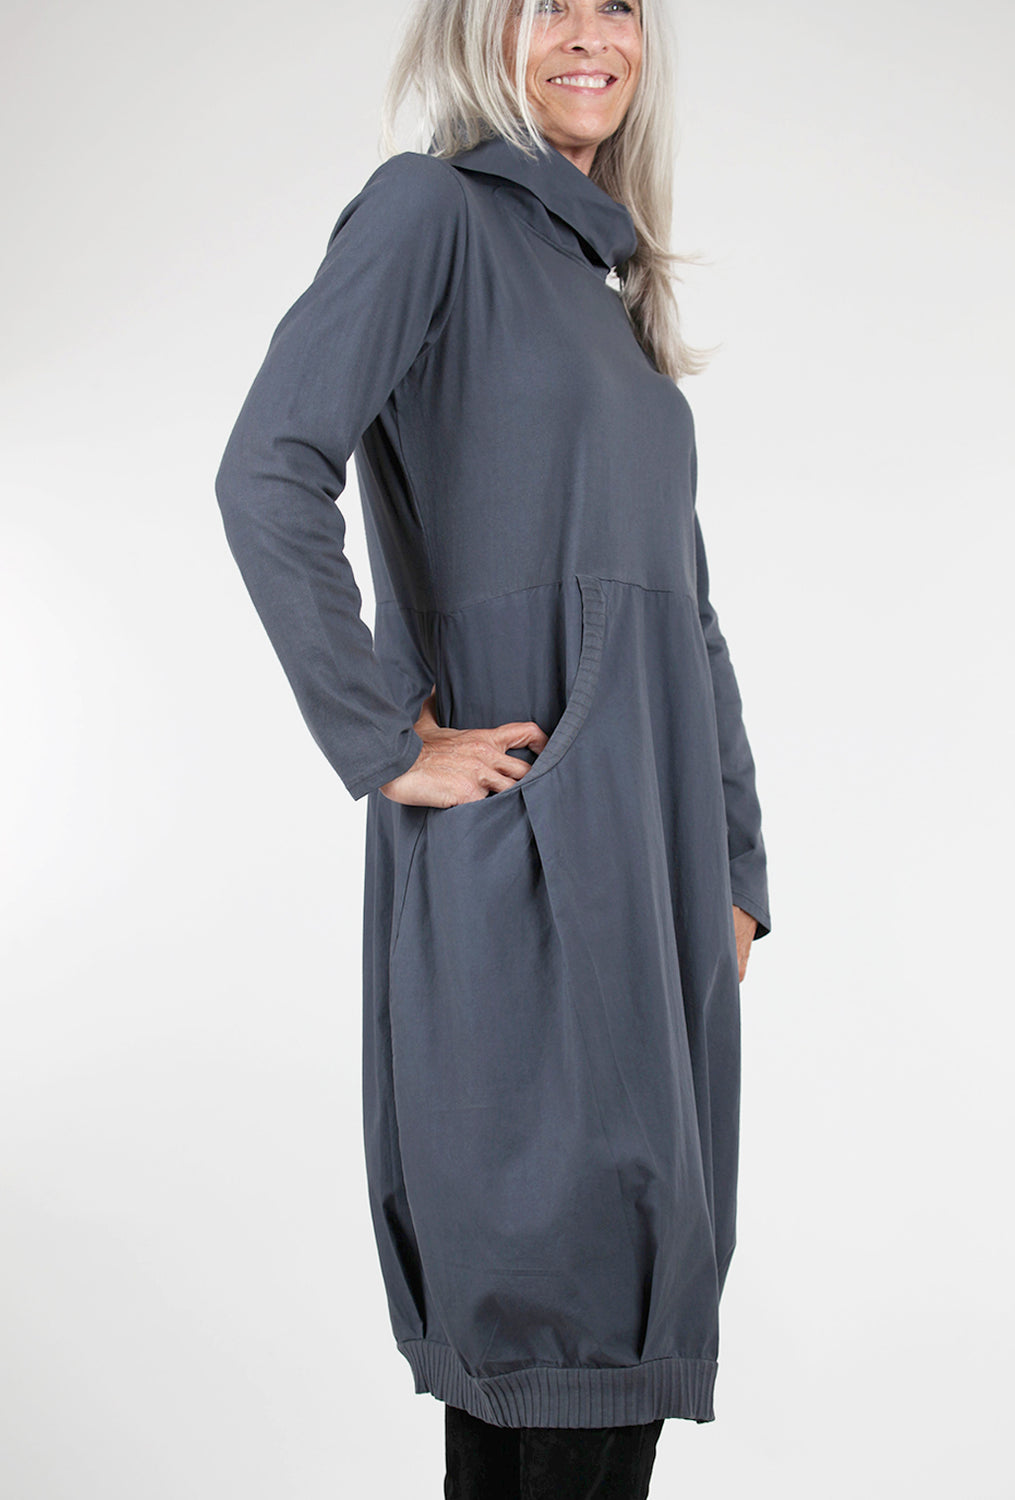 Fenini Trimmed Pocket Cowl Dress, Gray 